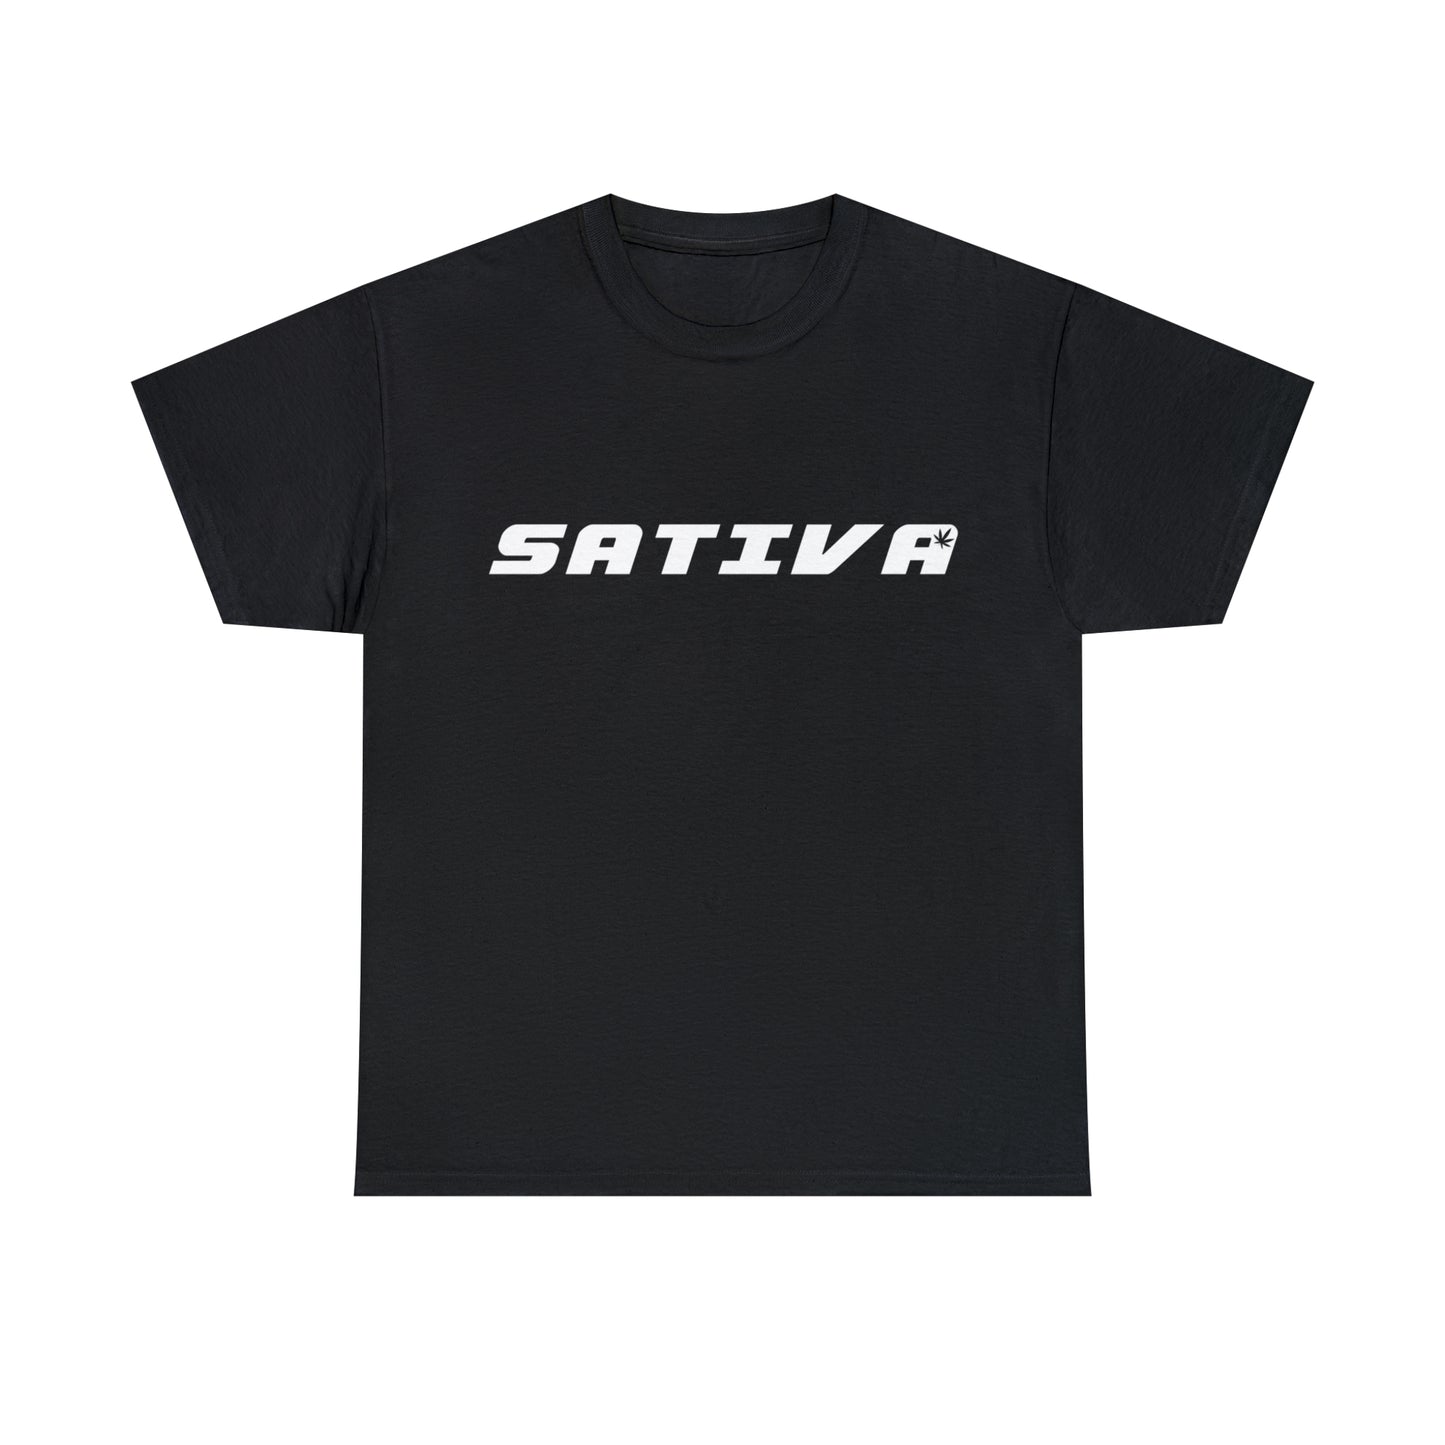 Sativa fan shirt